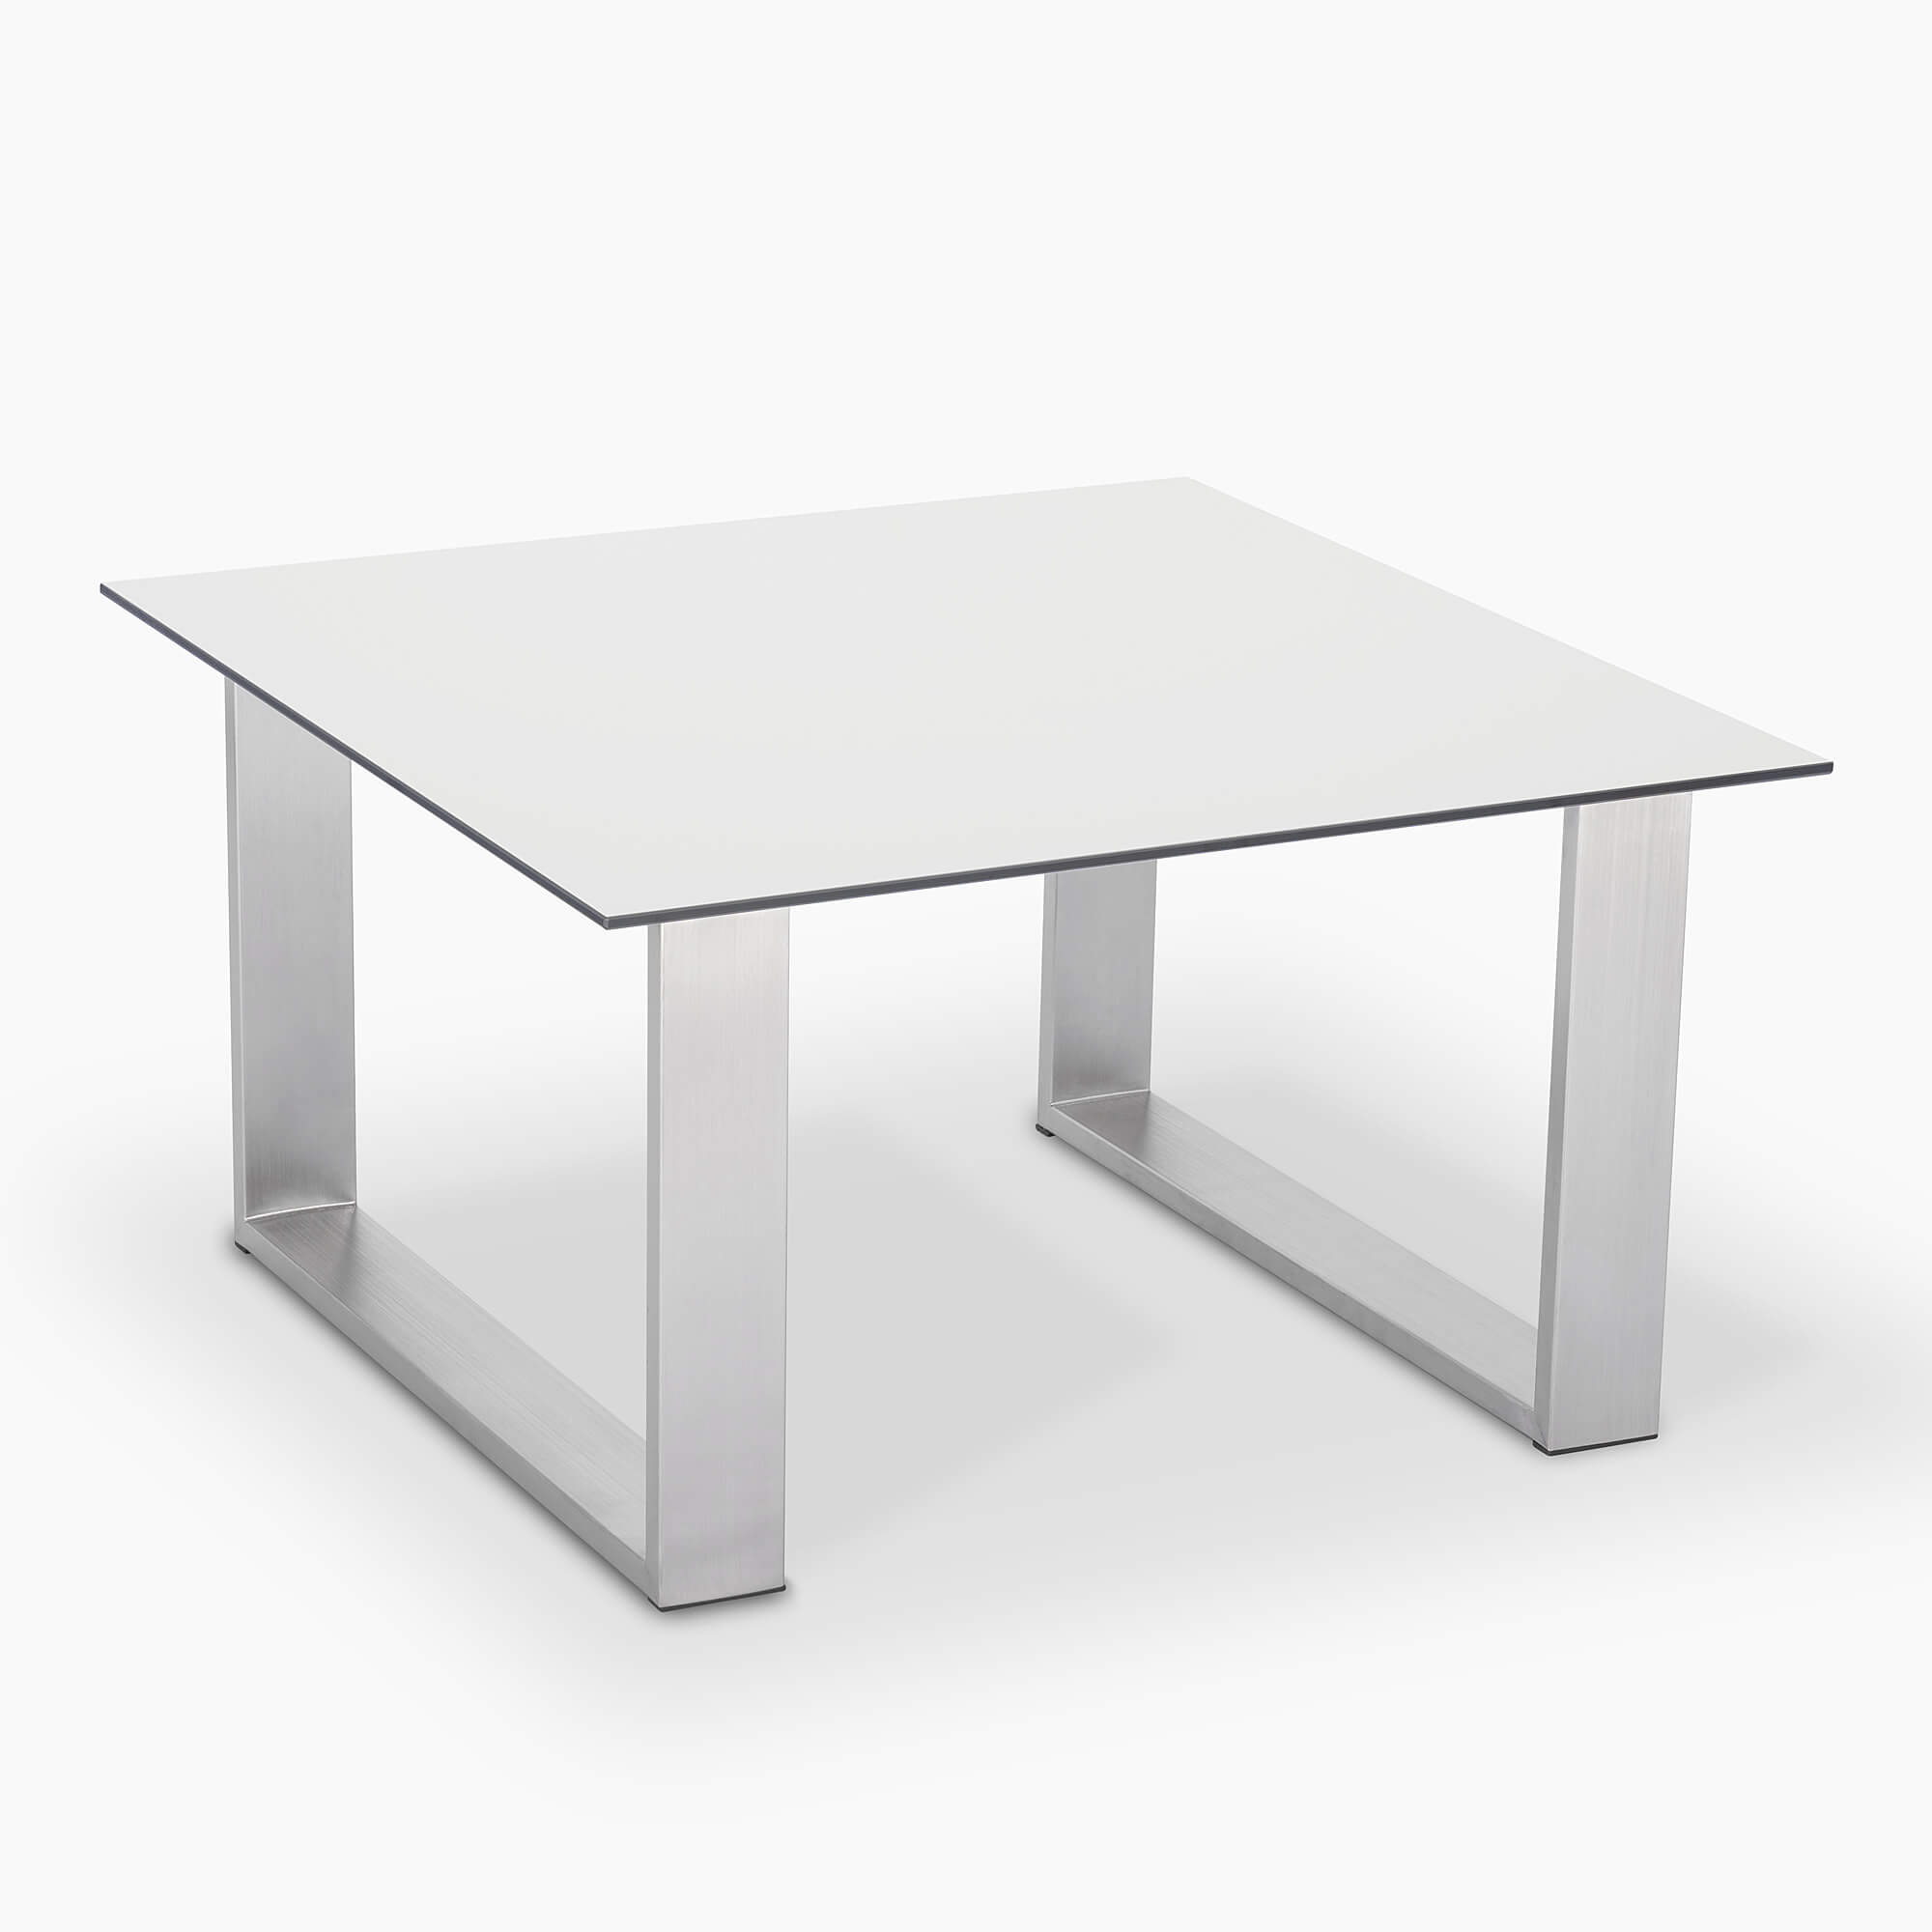 White-wood-coffee-table-80-x-80-cm-metal-skids